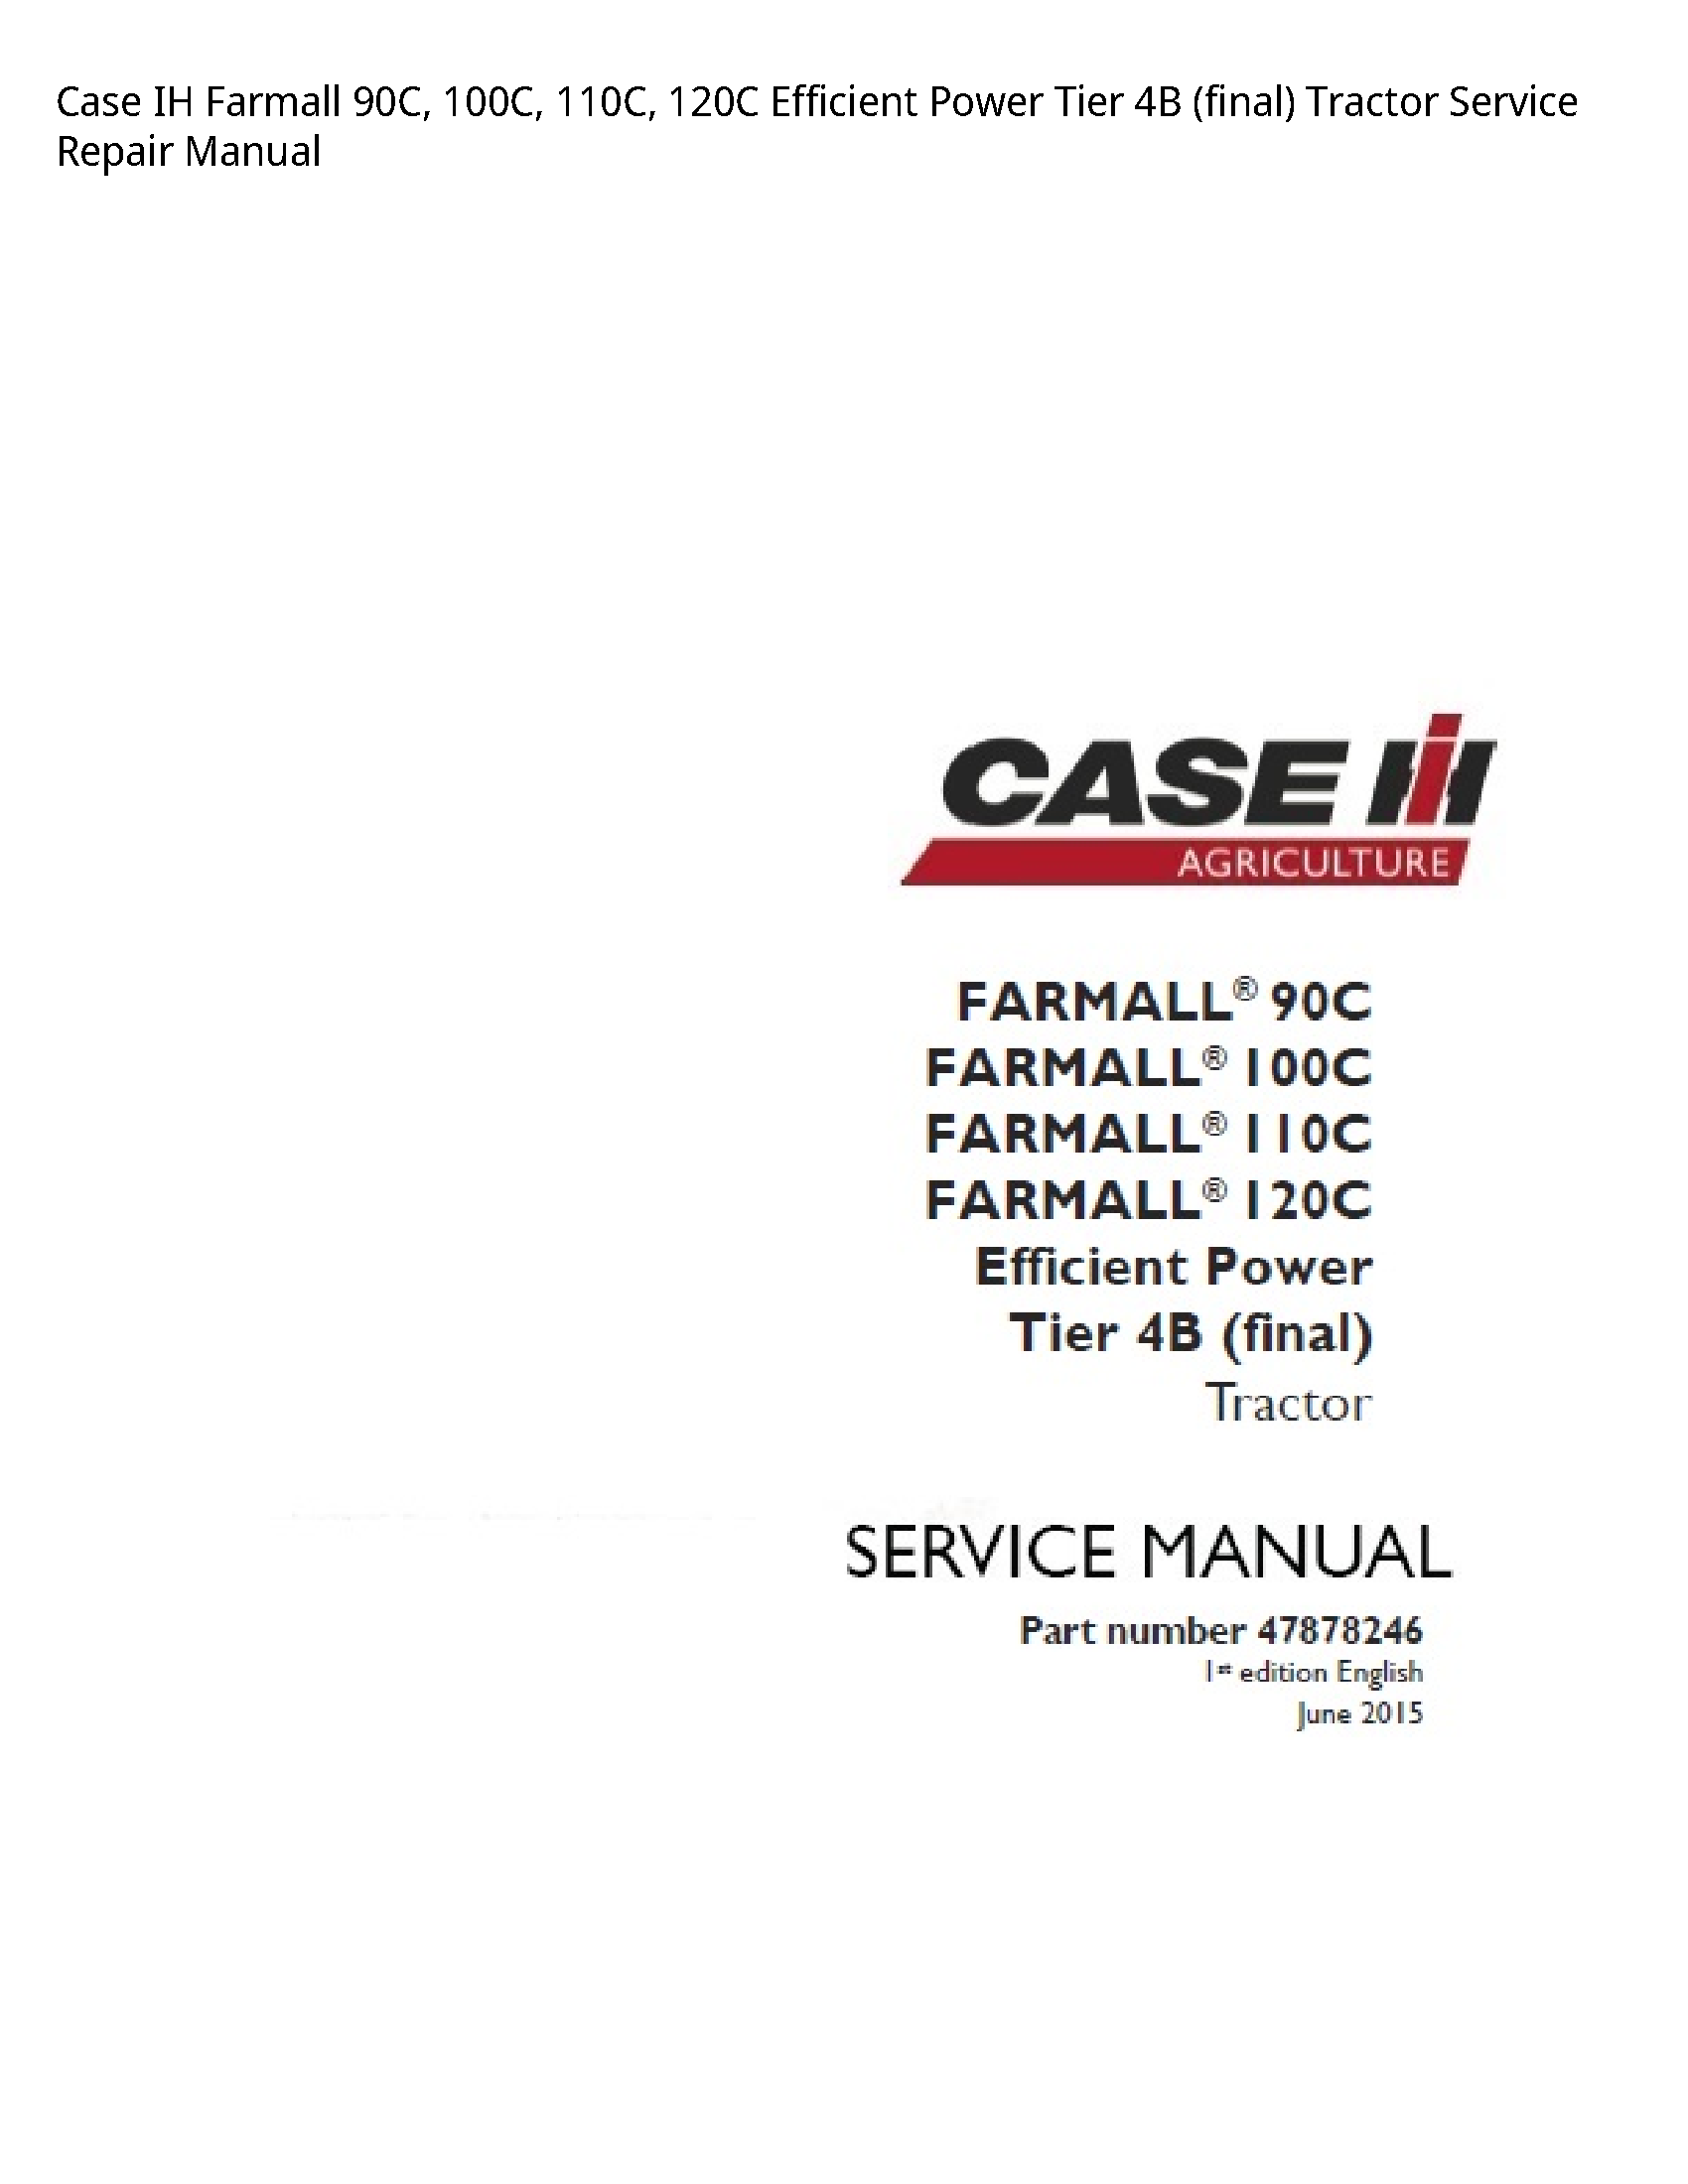 Case/Case IH 90C IH Farmall Efficient Power Tier (final) Tractor manual